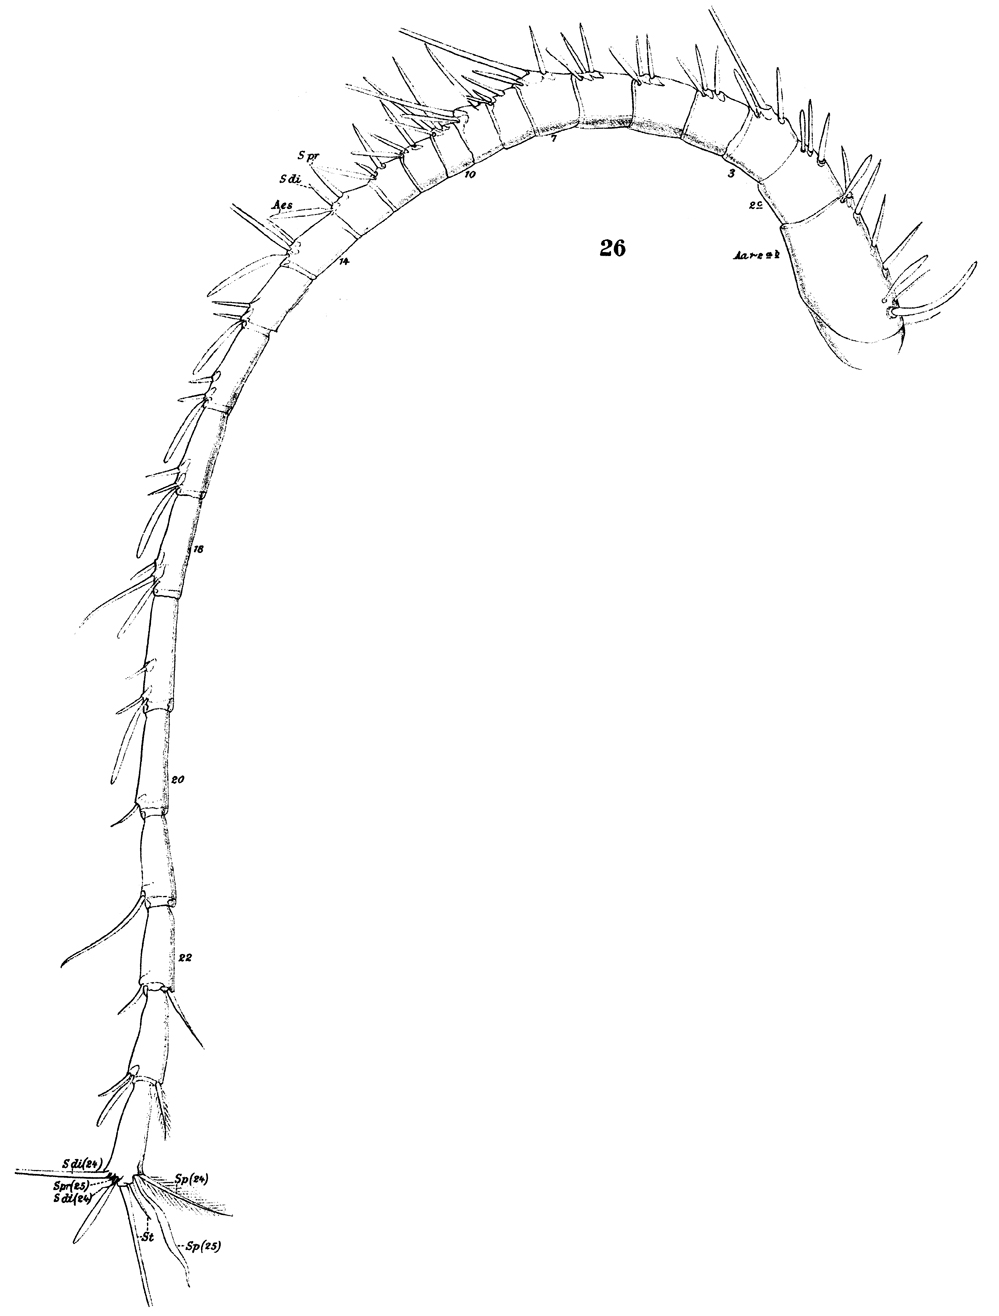 Species Nullosetigera giesbrechti - Plate 4 of morphological figures